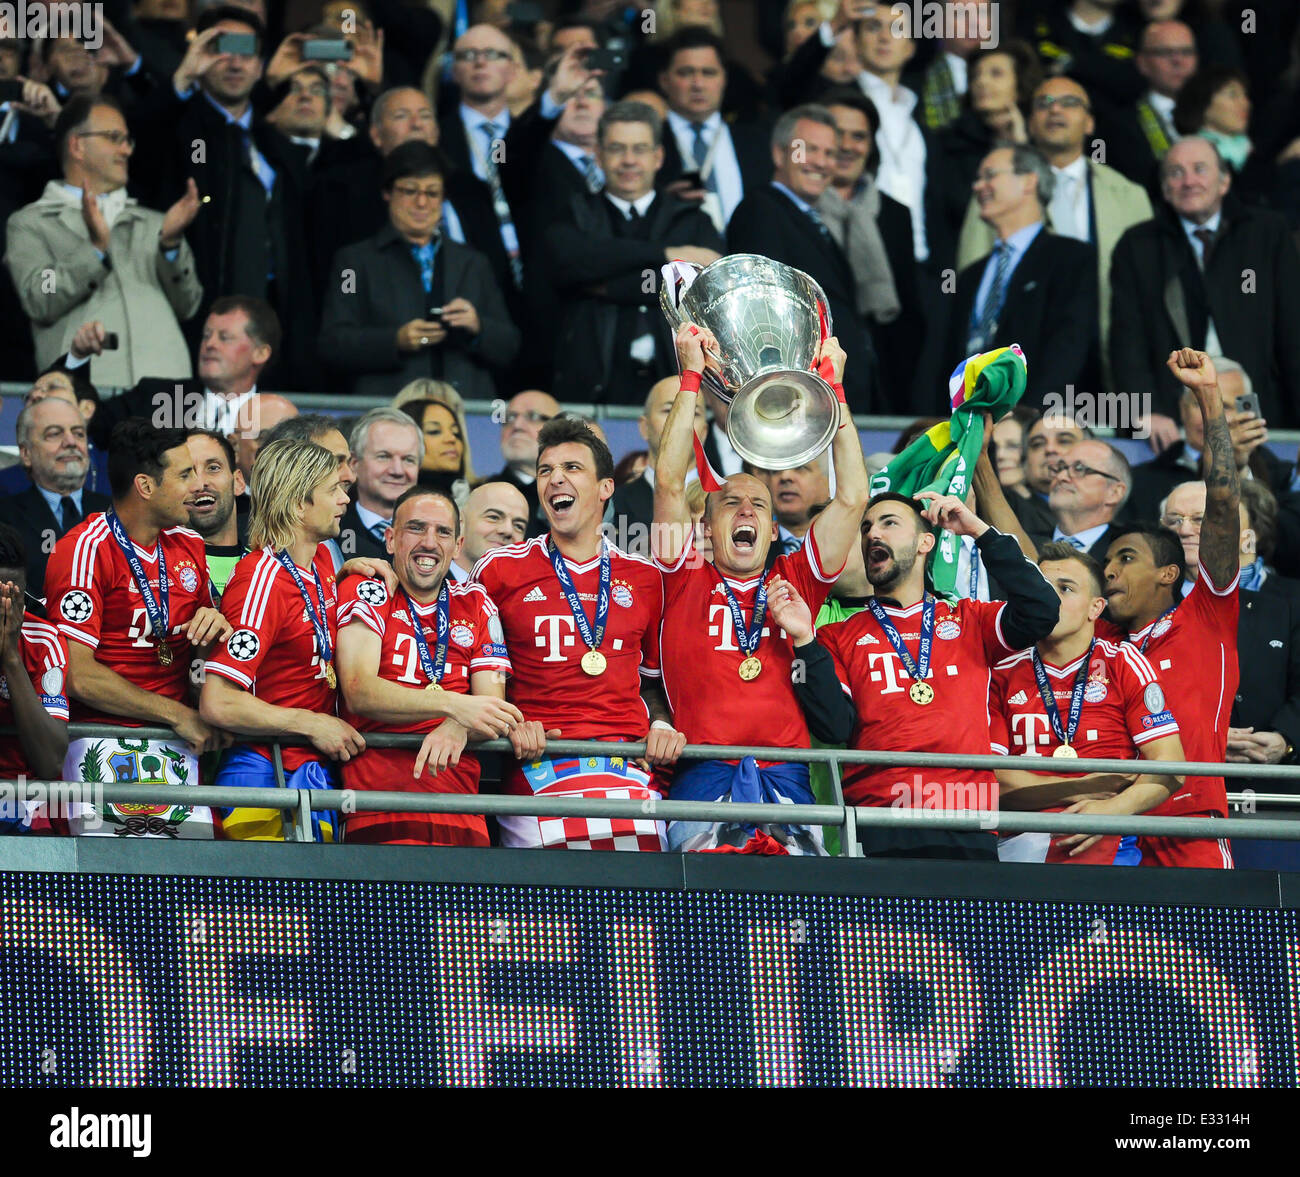 2013 uefa champions league final